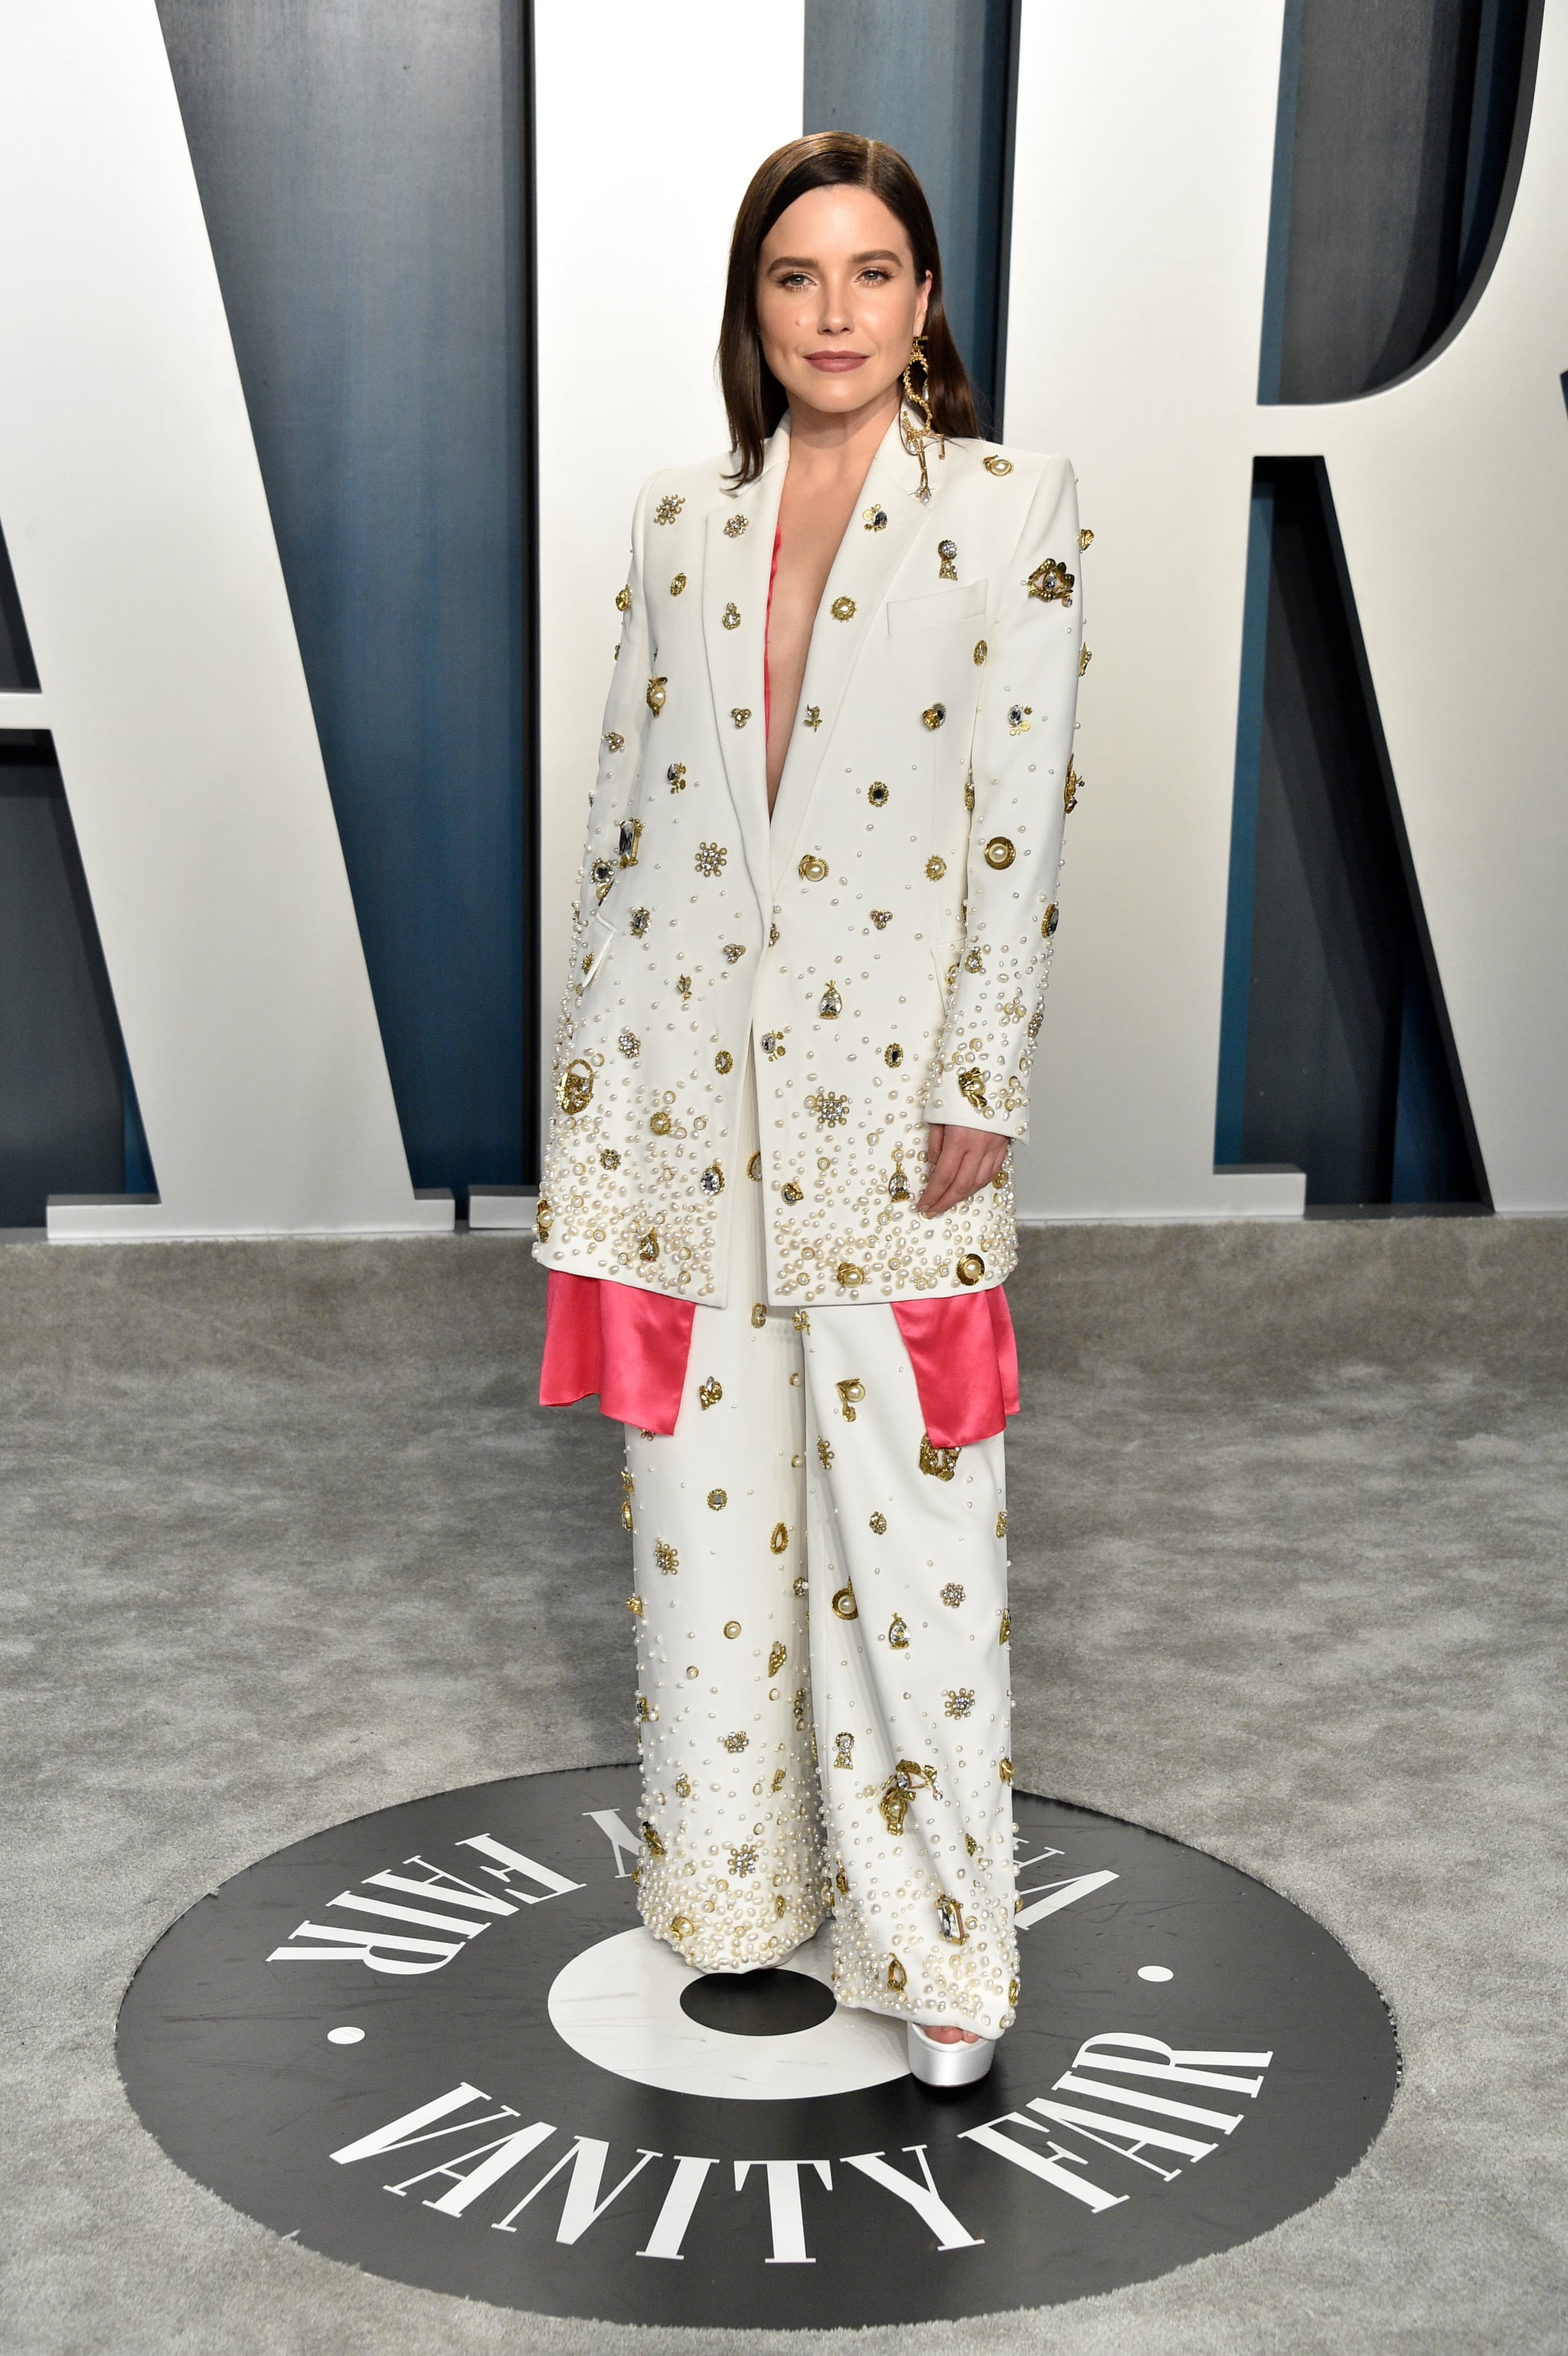 Sophia Bush at the Vanity Fair Oscars Afterparty 2020